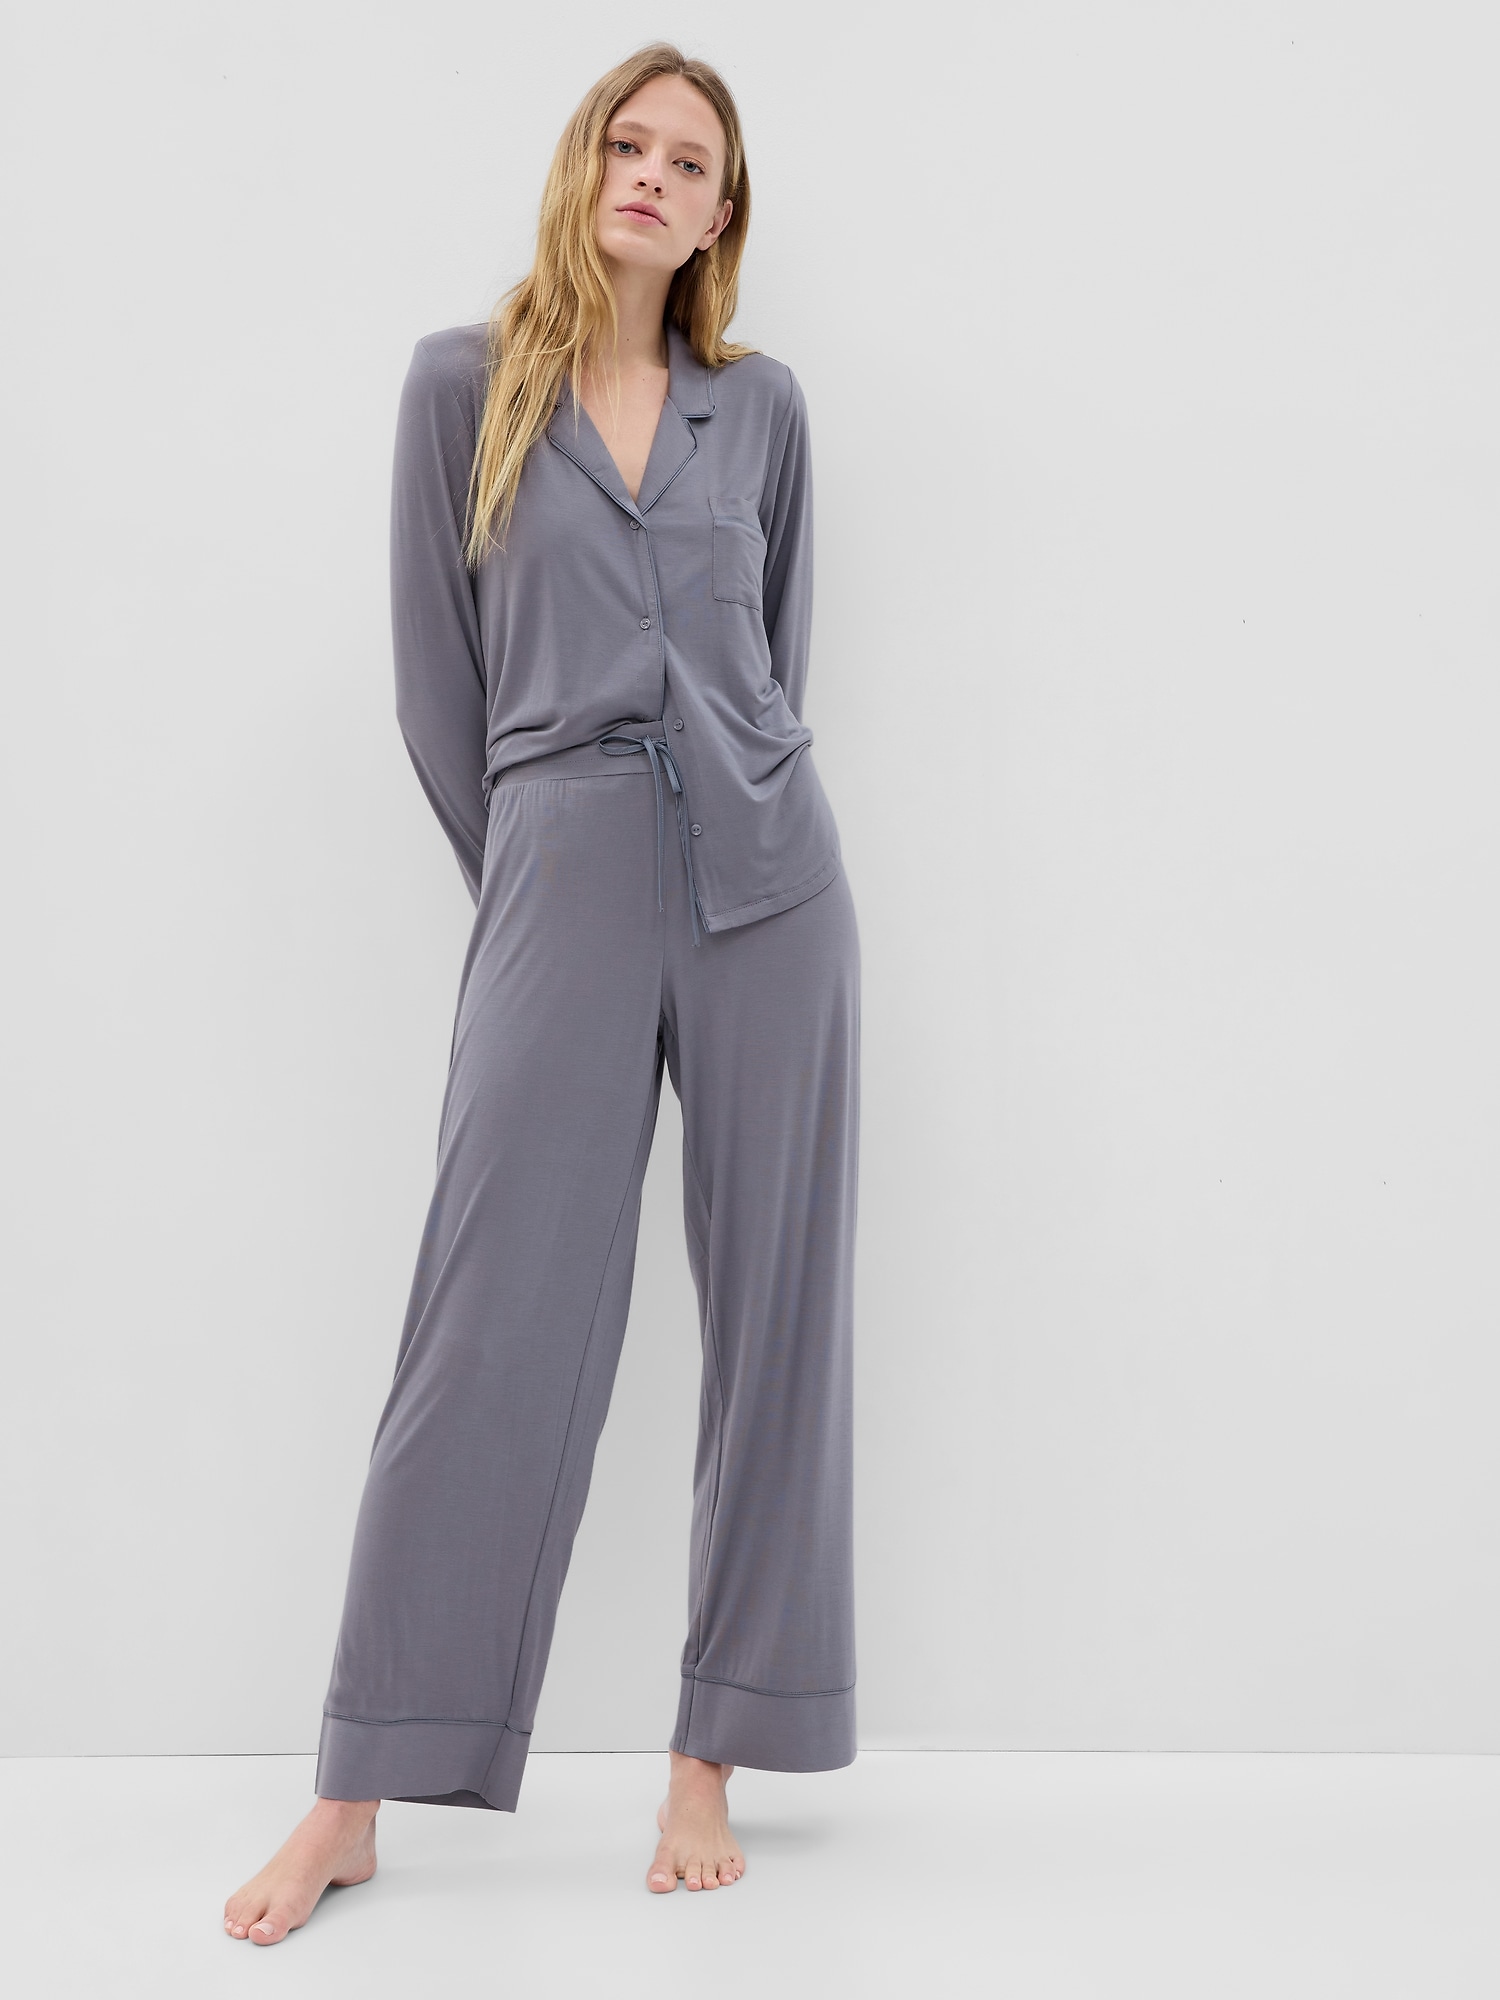 Gap Modal Pajama Pants